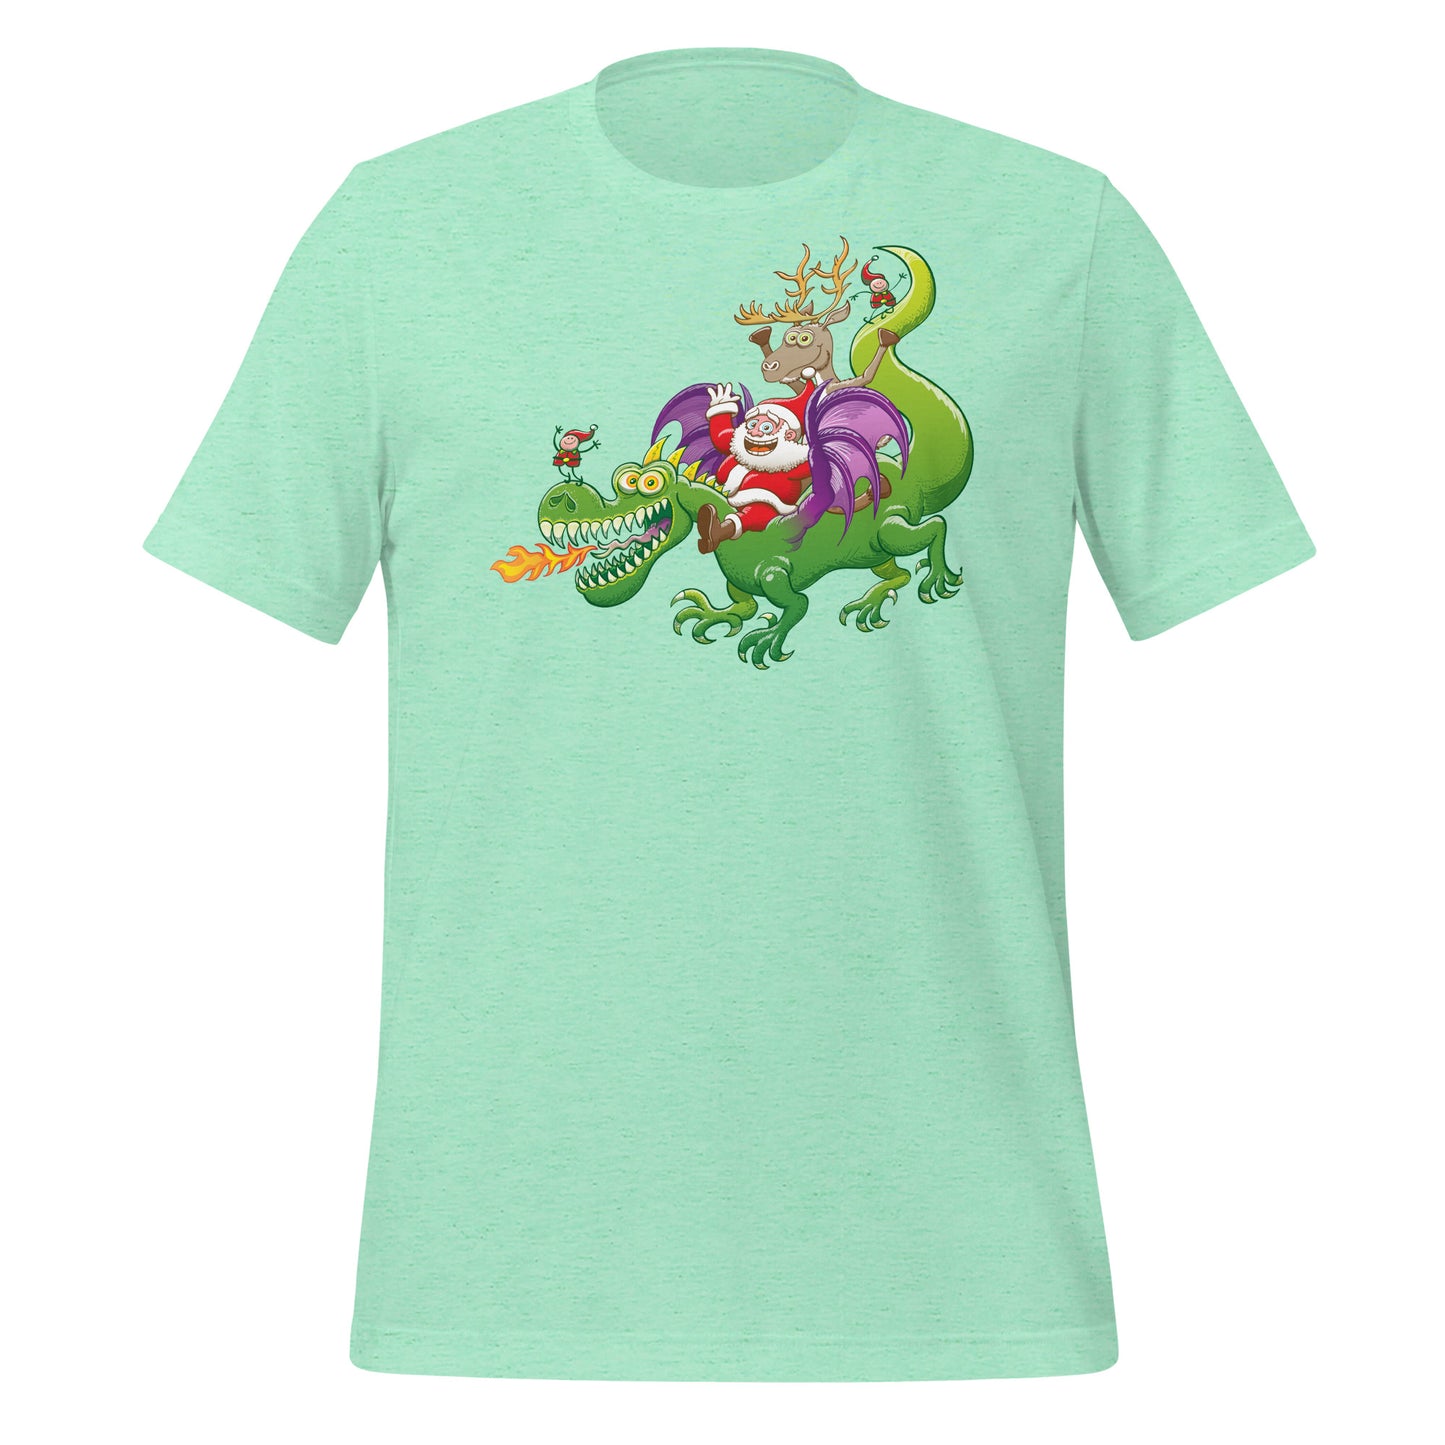 Santa's Dragon-Powered Celebration: Innovative Christmas Adventure - Unisex t-shirt. Front view. Heather mint color